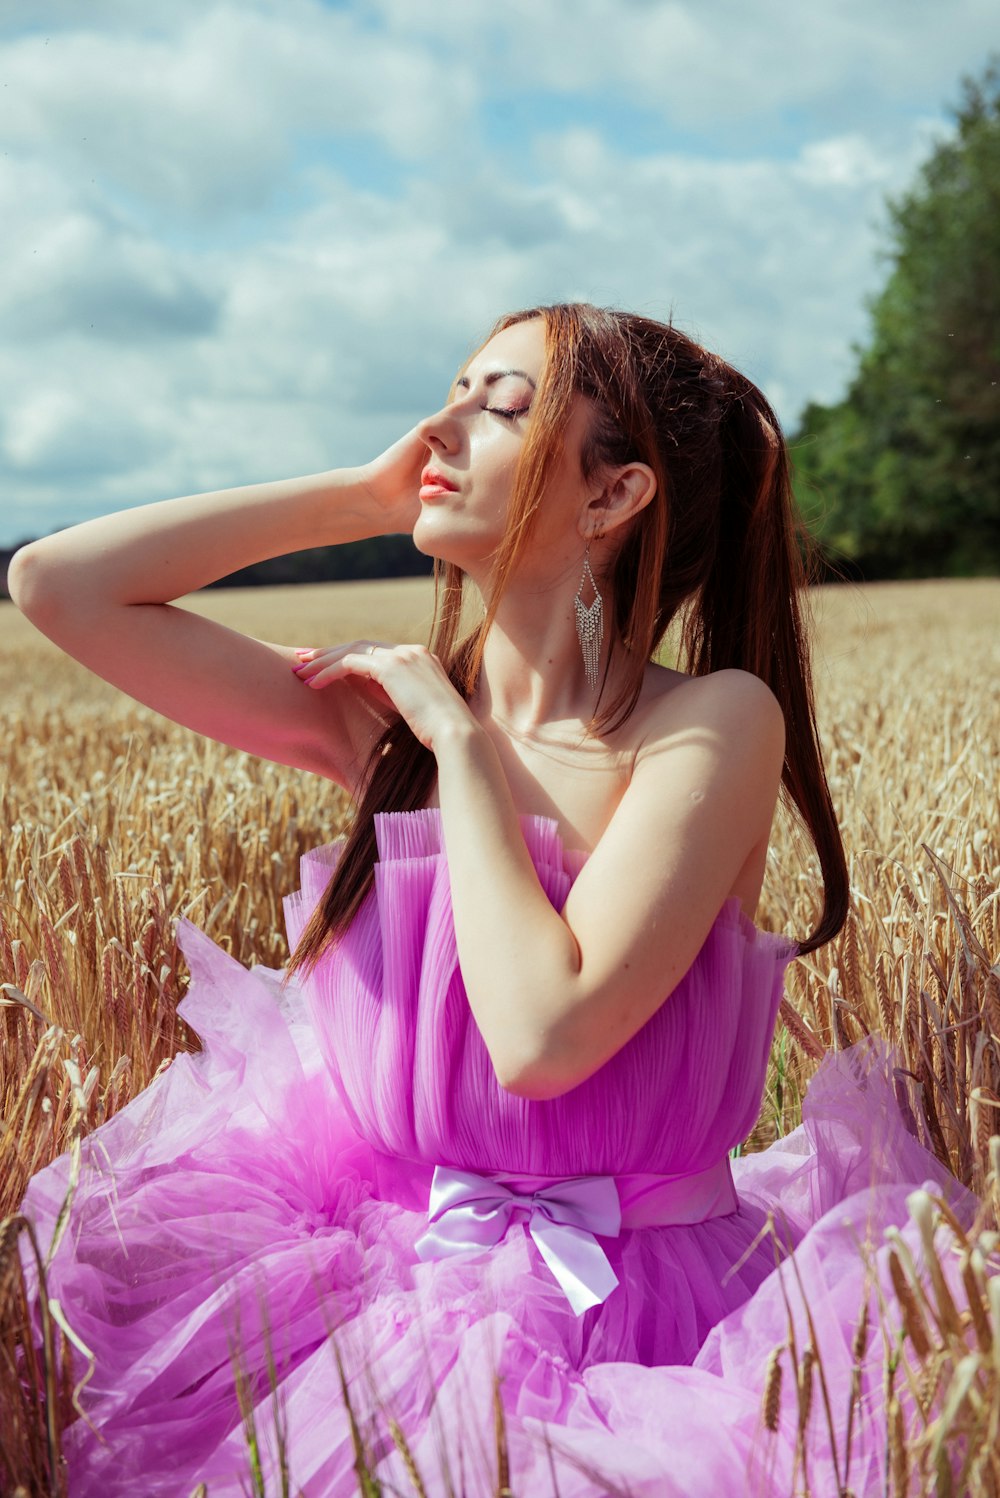 a woman in a pink dress sitting in a wheat field